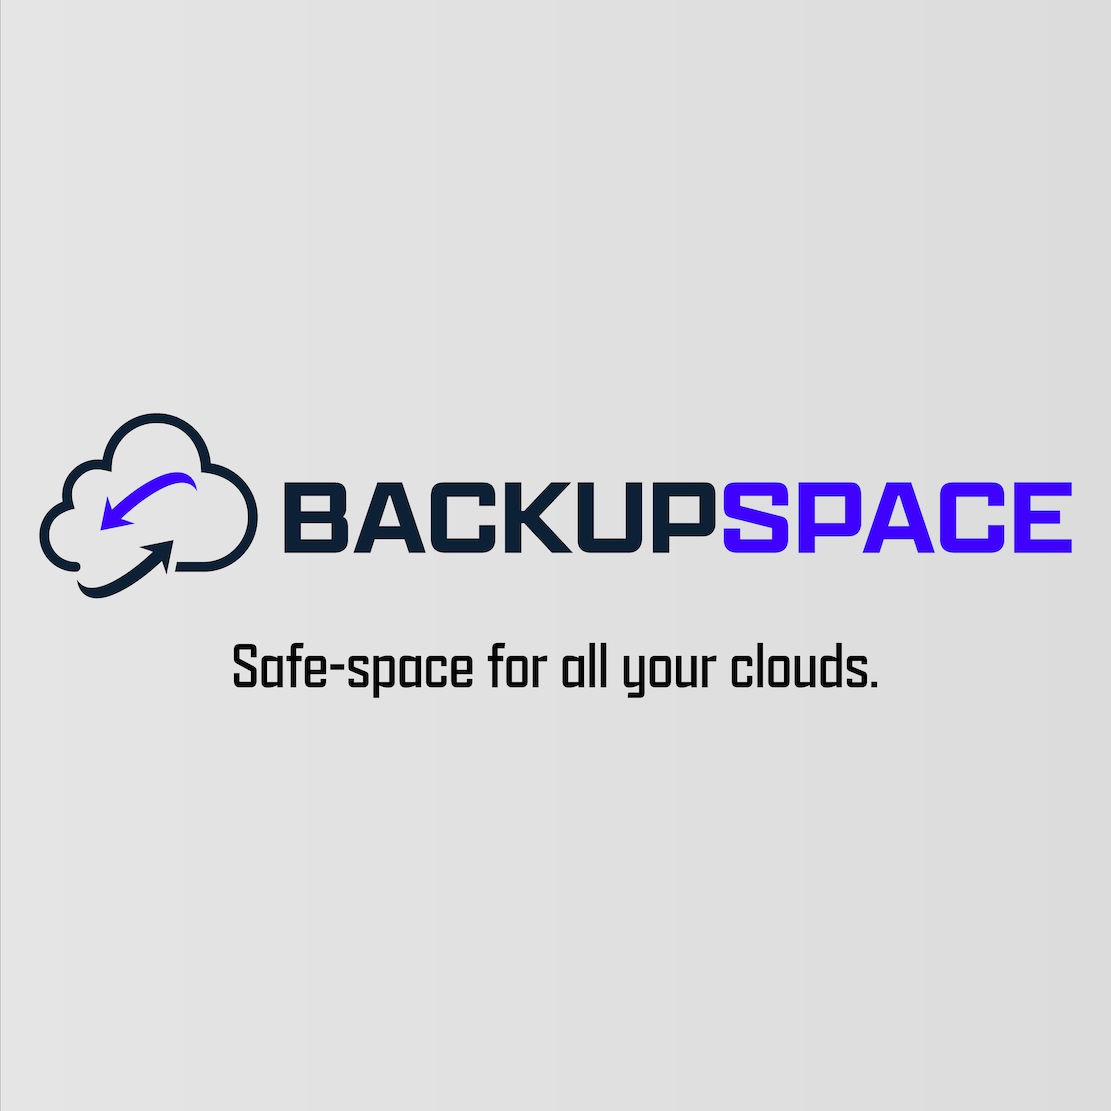 backupspace.com custom logo product card image